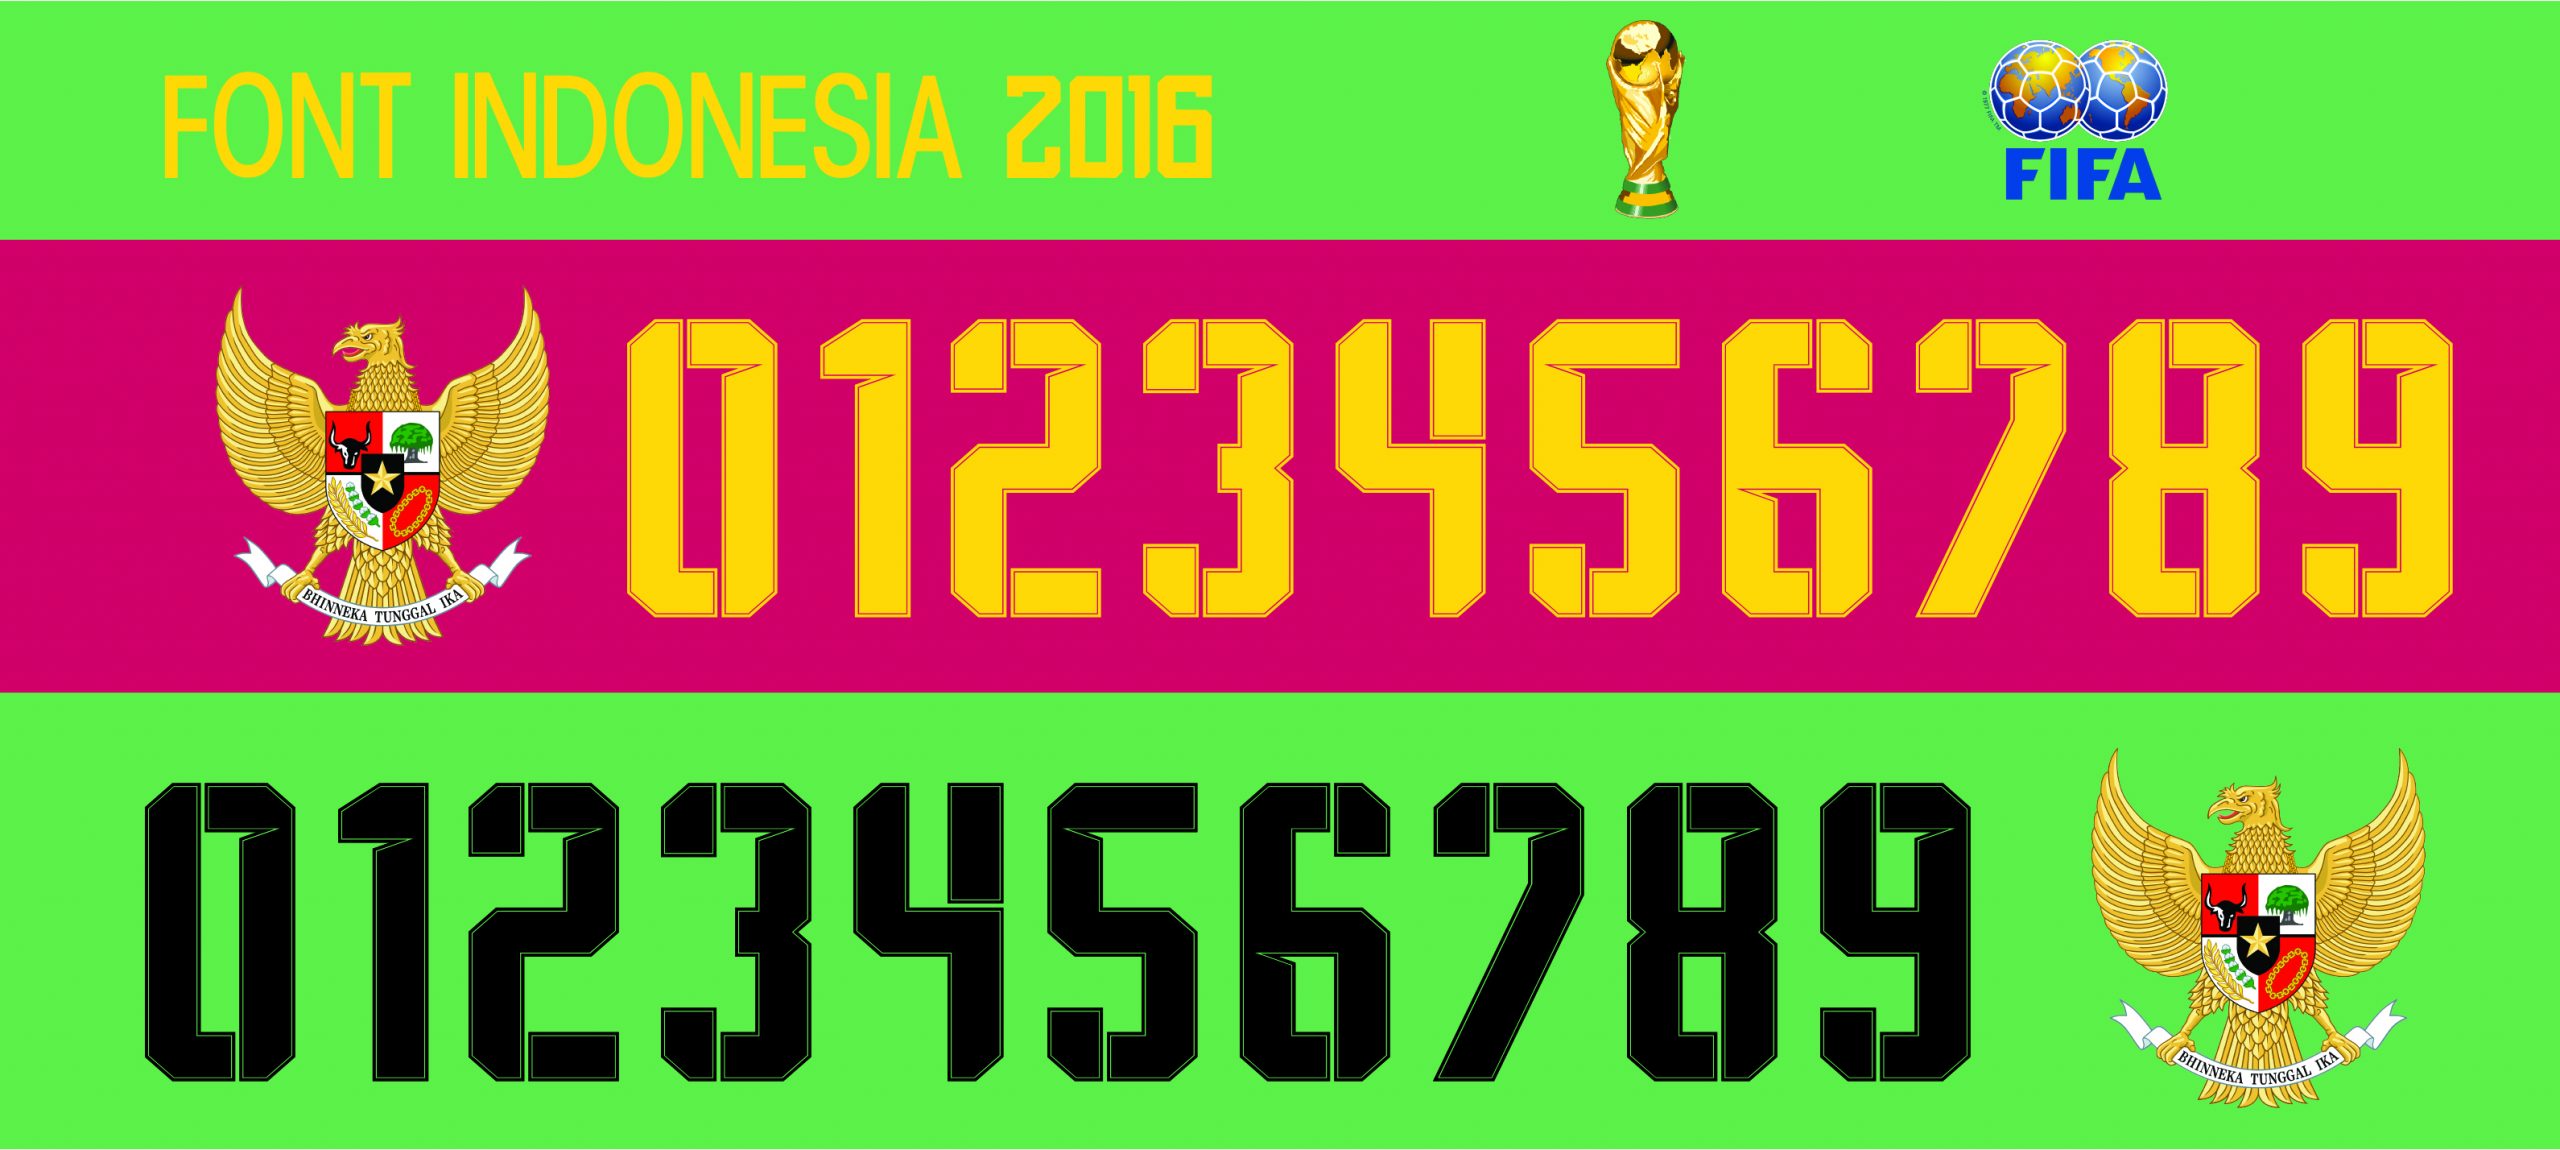 Font Indonesia 2016